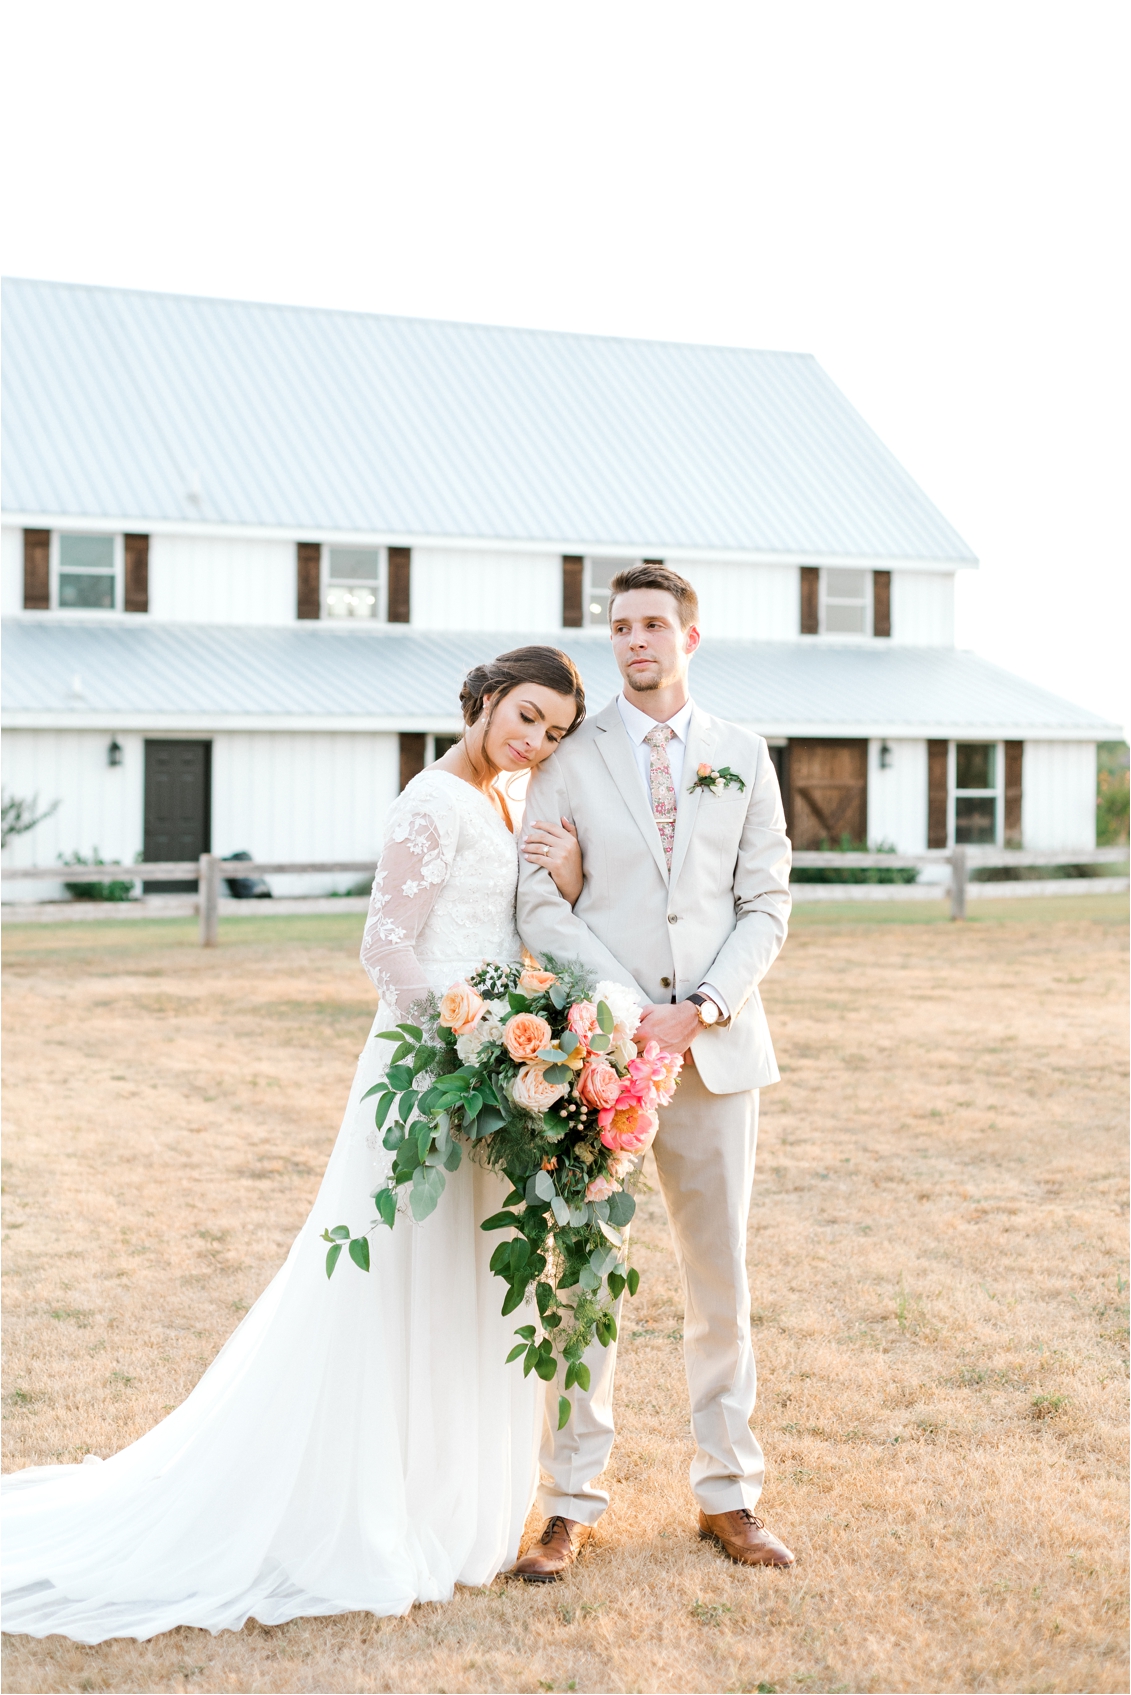 Five Oaks Farm Wedding in Cleburne, Texas by Gaby Caskey Photography, bride and groom portraits, white barn wedding, barn wedding day inspiration